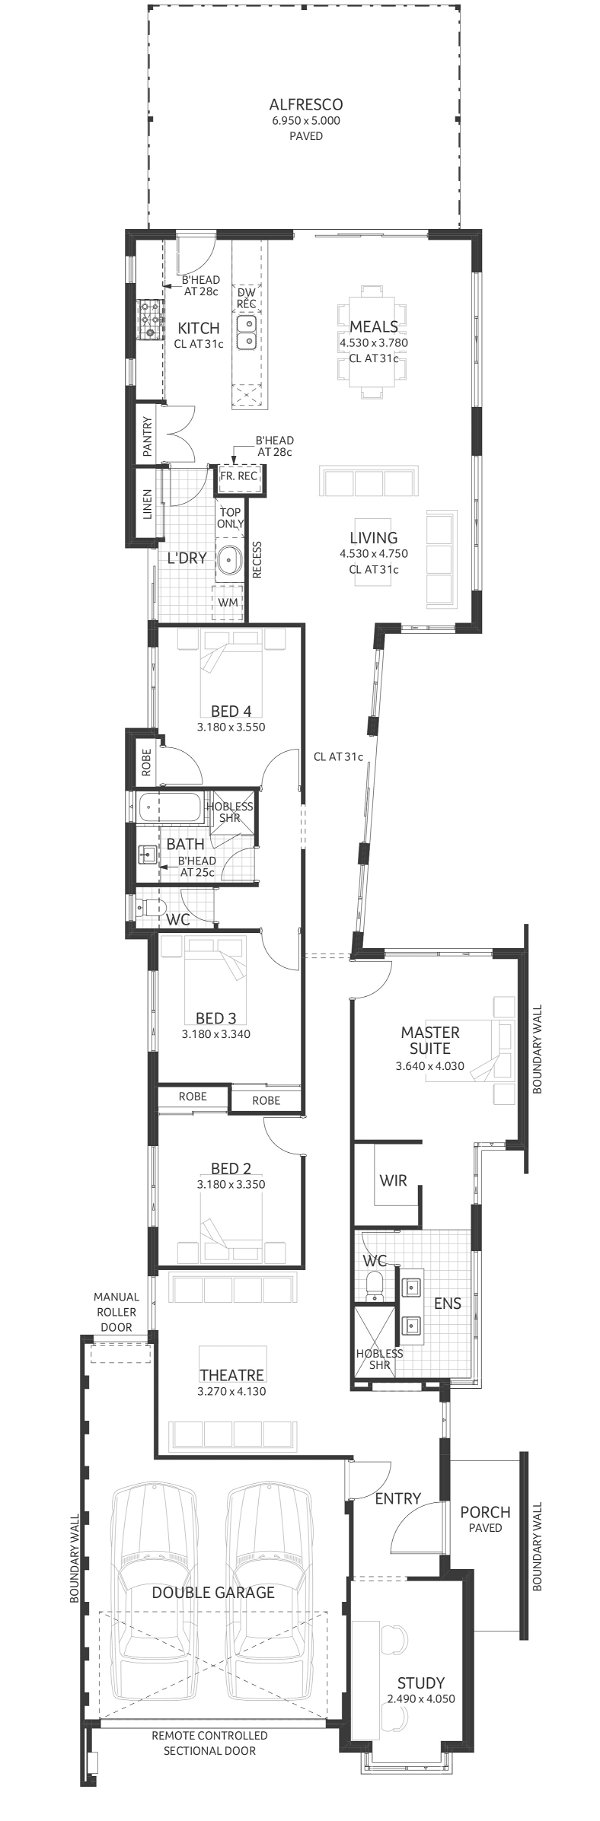 Plunkett Homes - Ardross | Federation - Floorplan - Ardross Luxe Federation Marketing Plan Croppedjpg